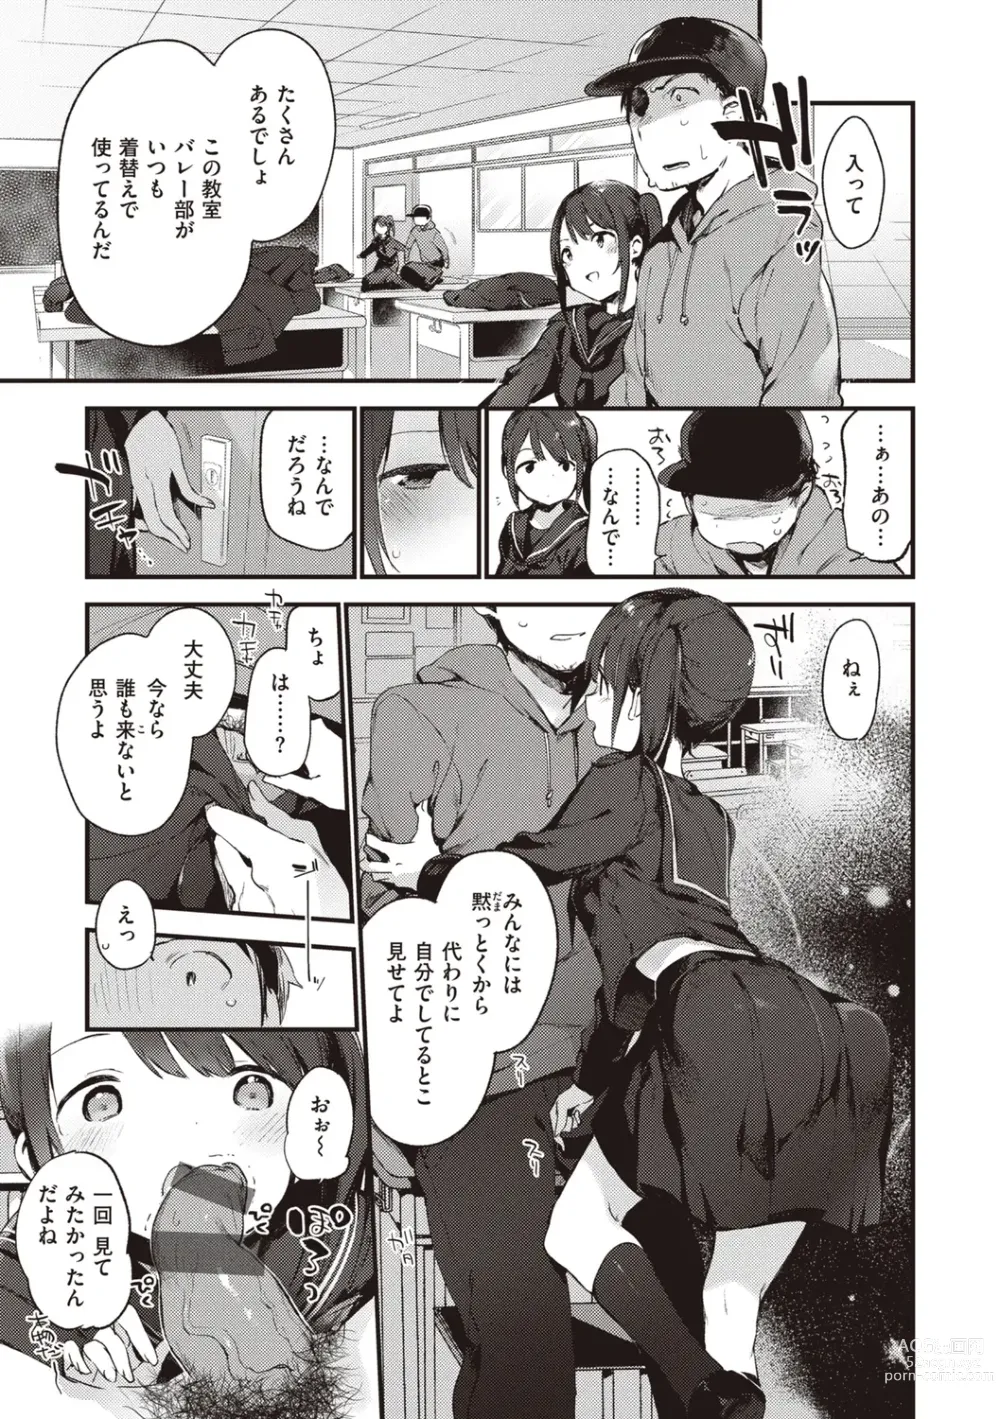 Page 9 of manga Nakushimono - Things I can´t find.